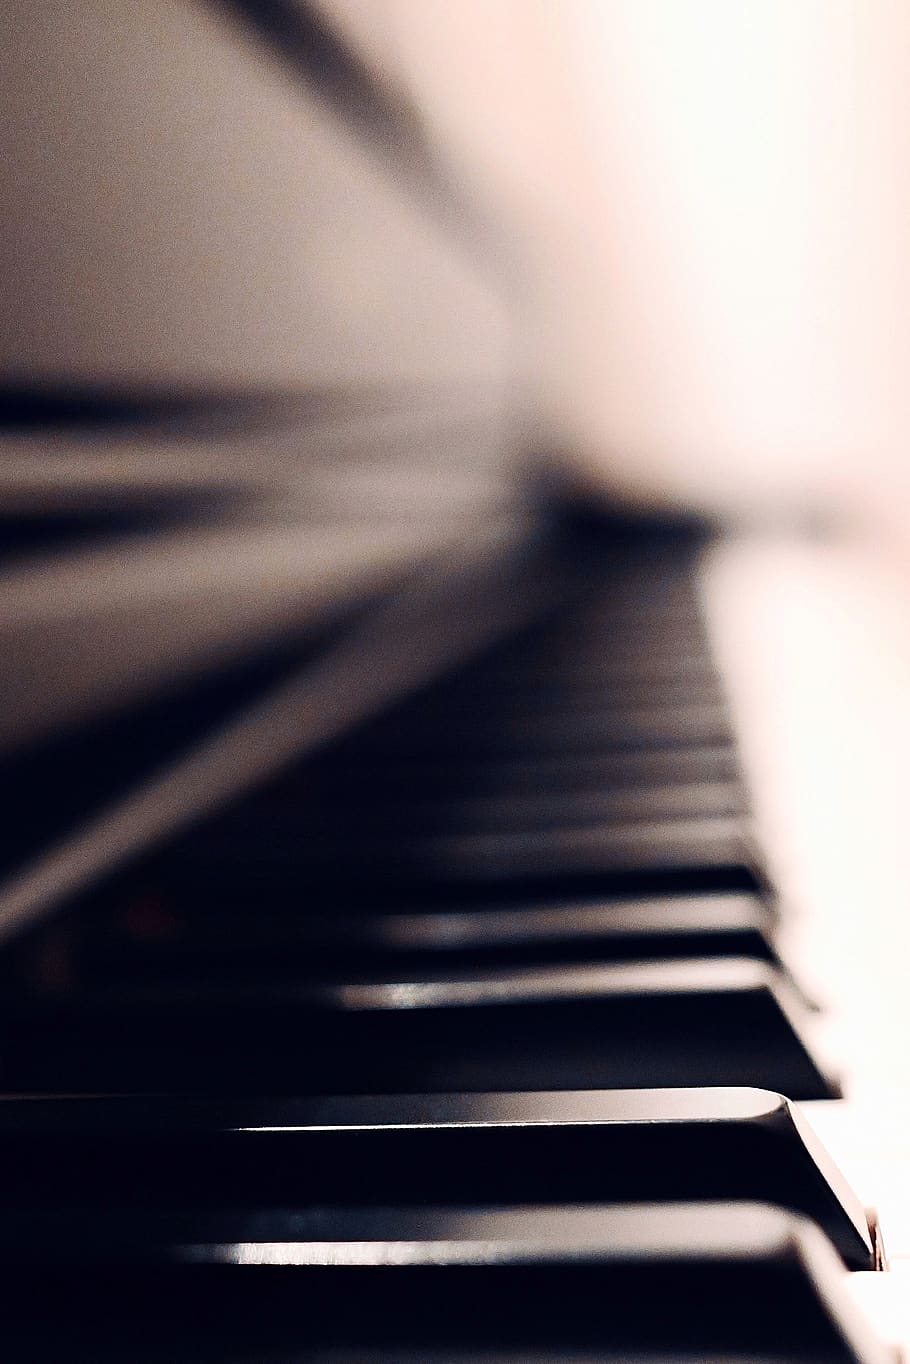 piano, piano keys, musical instrument, instrument, piano keyboard, music, keyboard, wing, keys, keyboard instrument